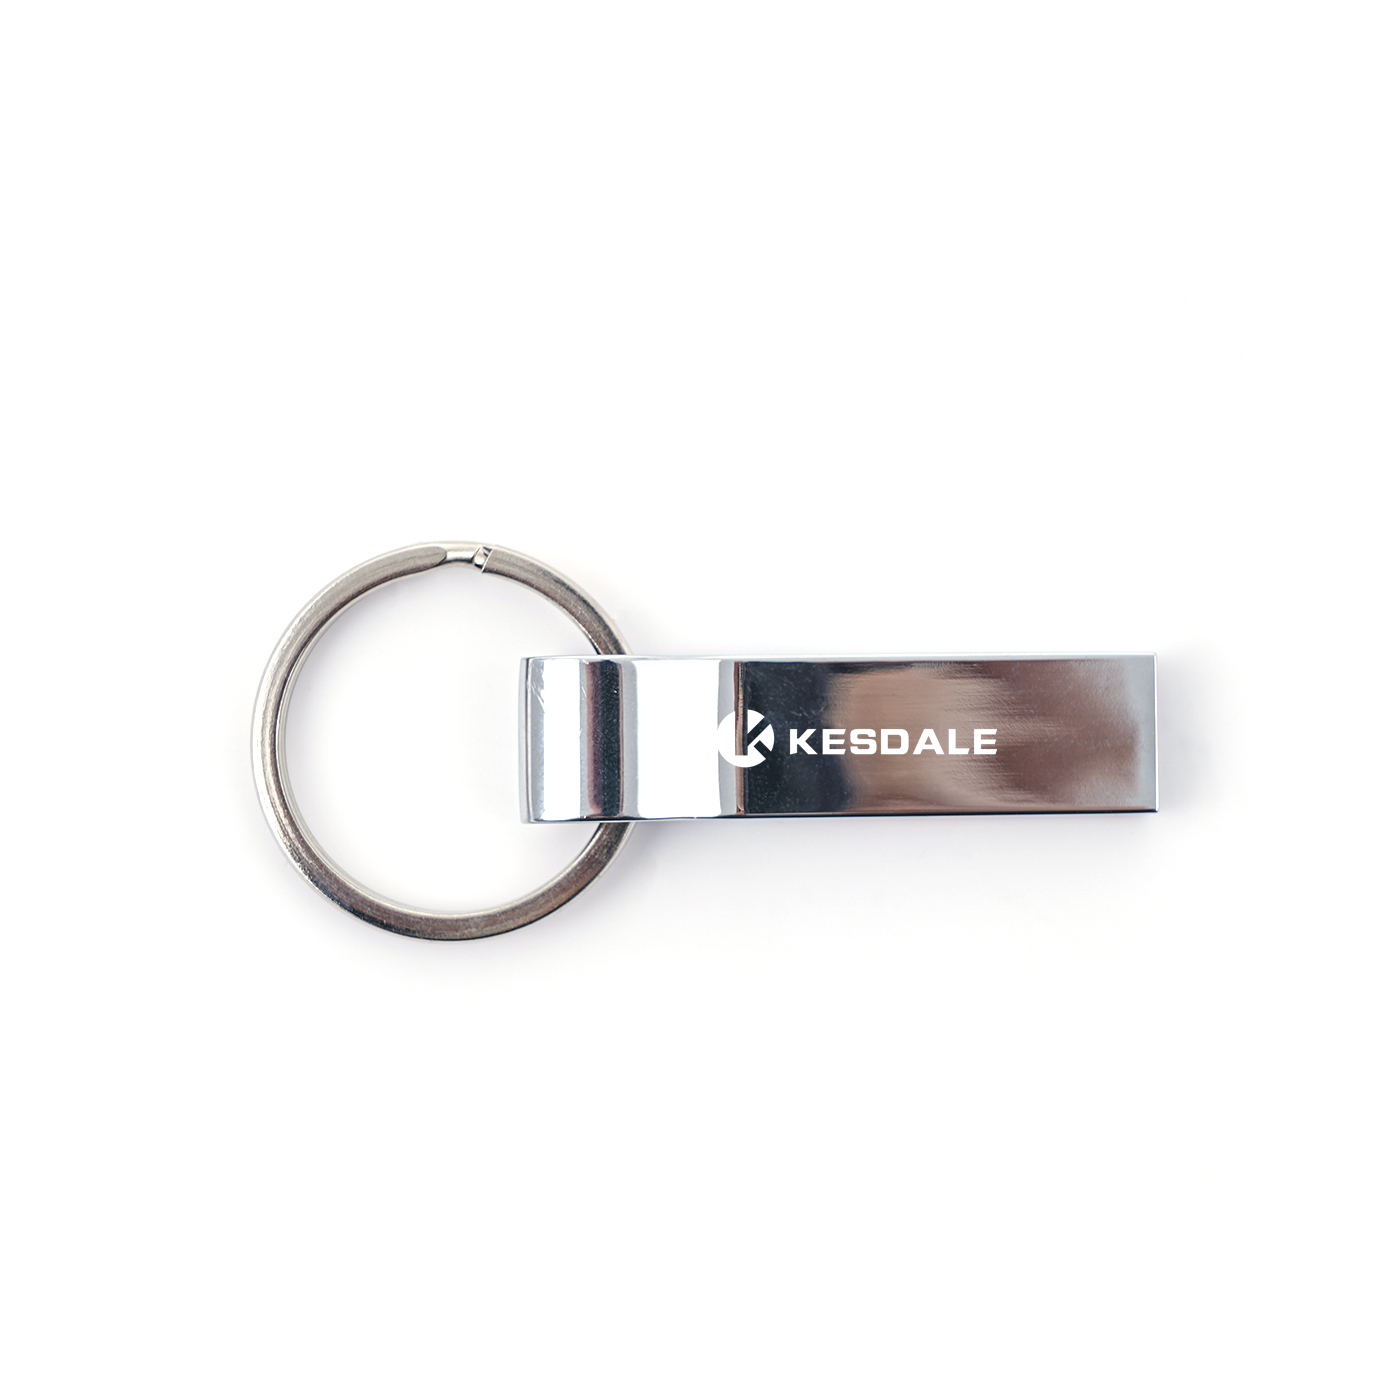 32GB Portable USB Flash Drive With Keychain1